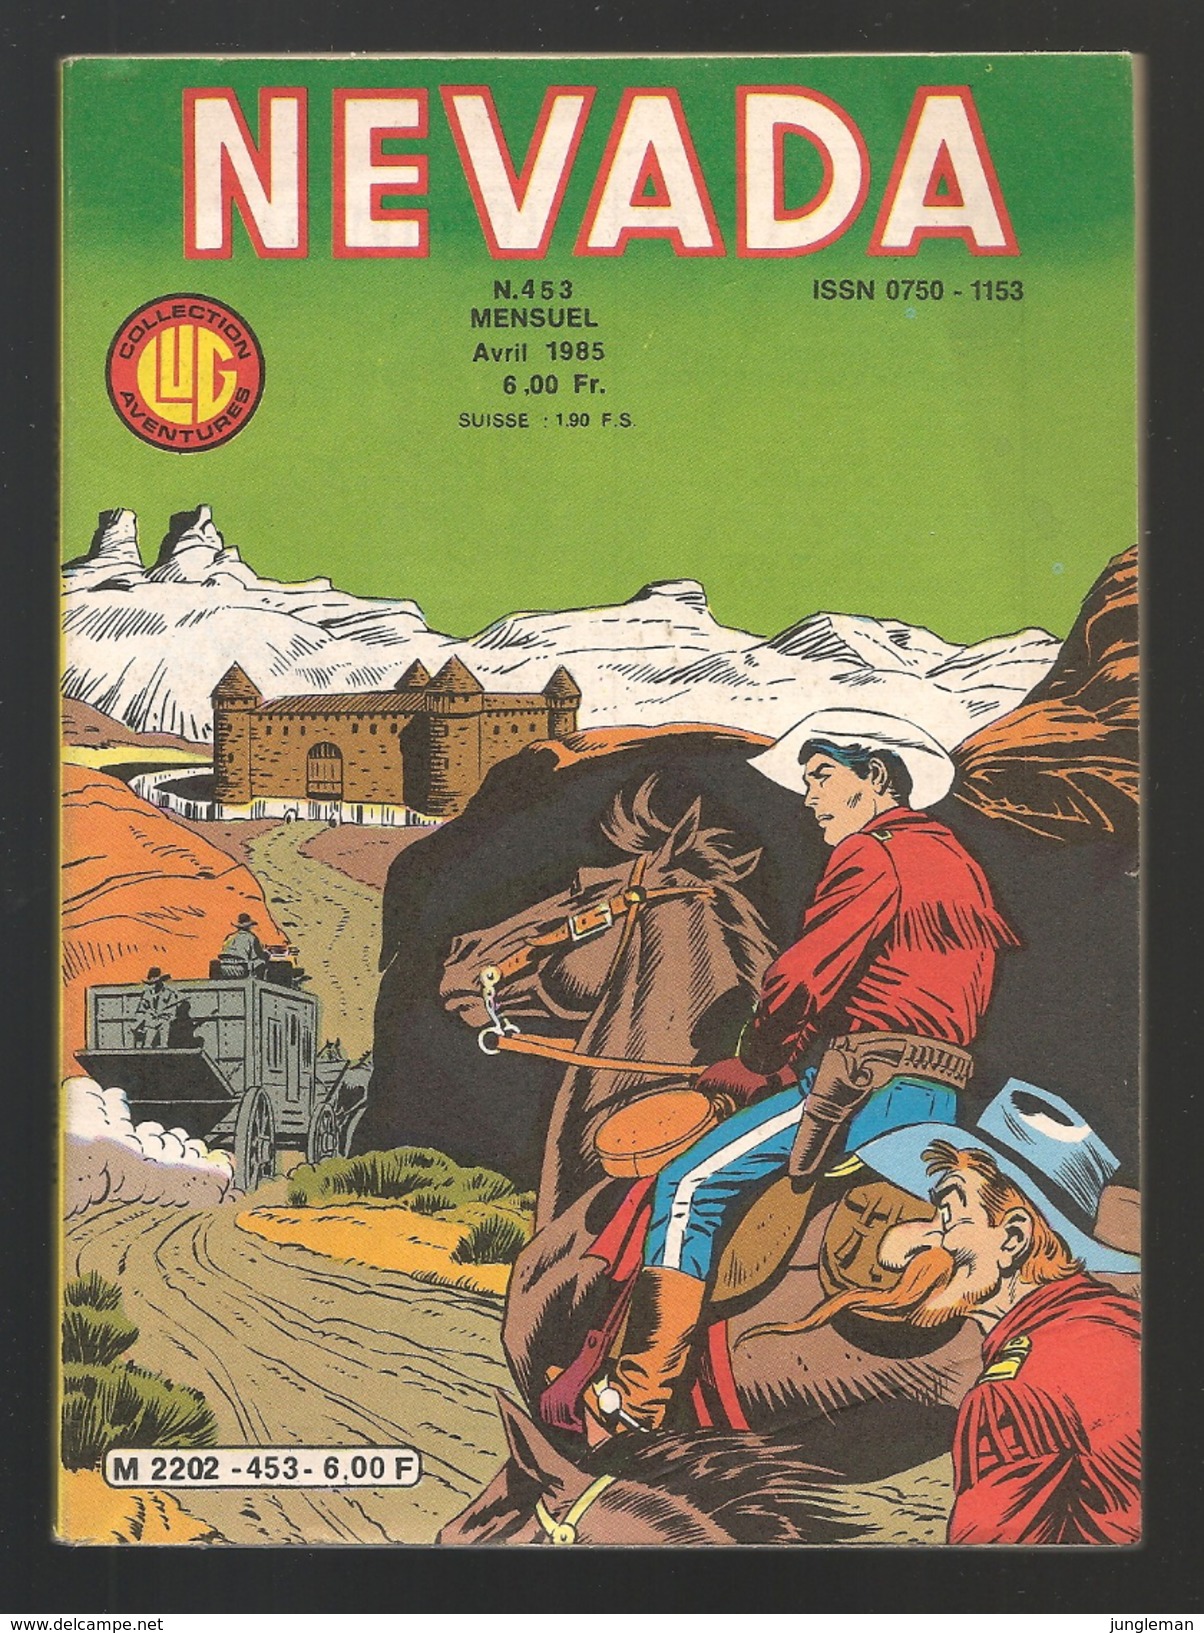 Nevada N° 453 - Editions LUG à Lyon - Avril 1985 - Avec Le Petit Ranger Et Tumac - Neuf. - Nevada